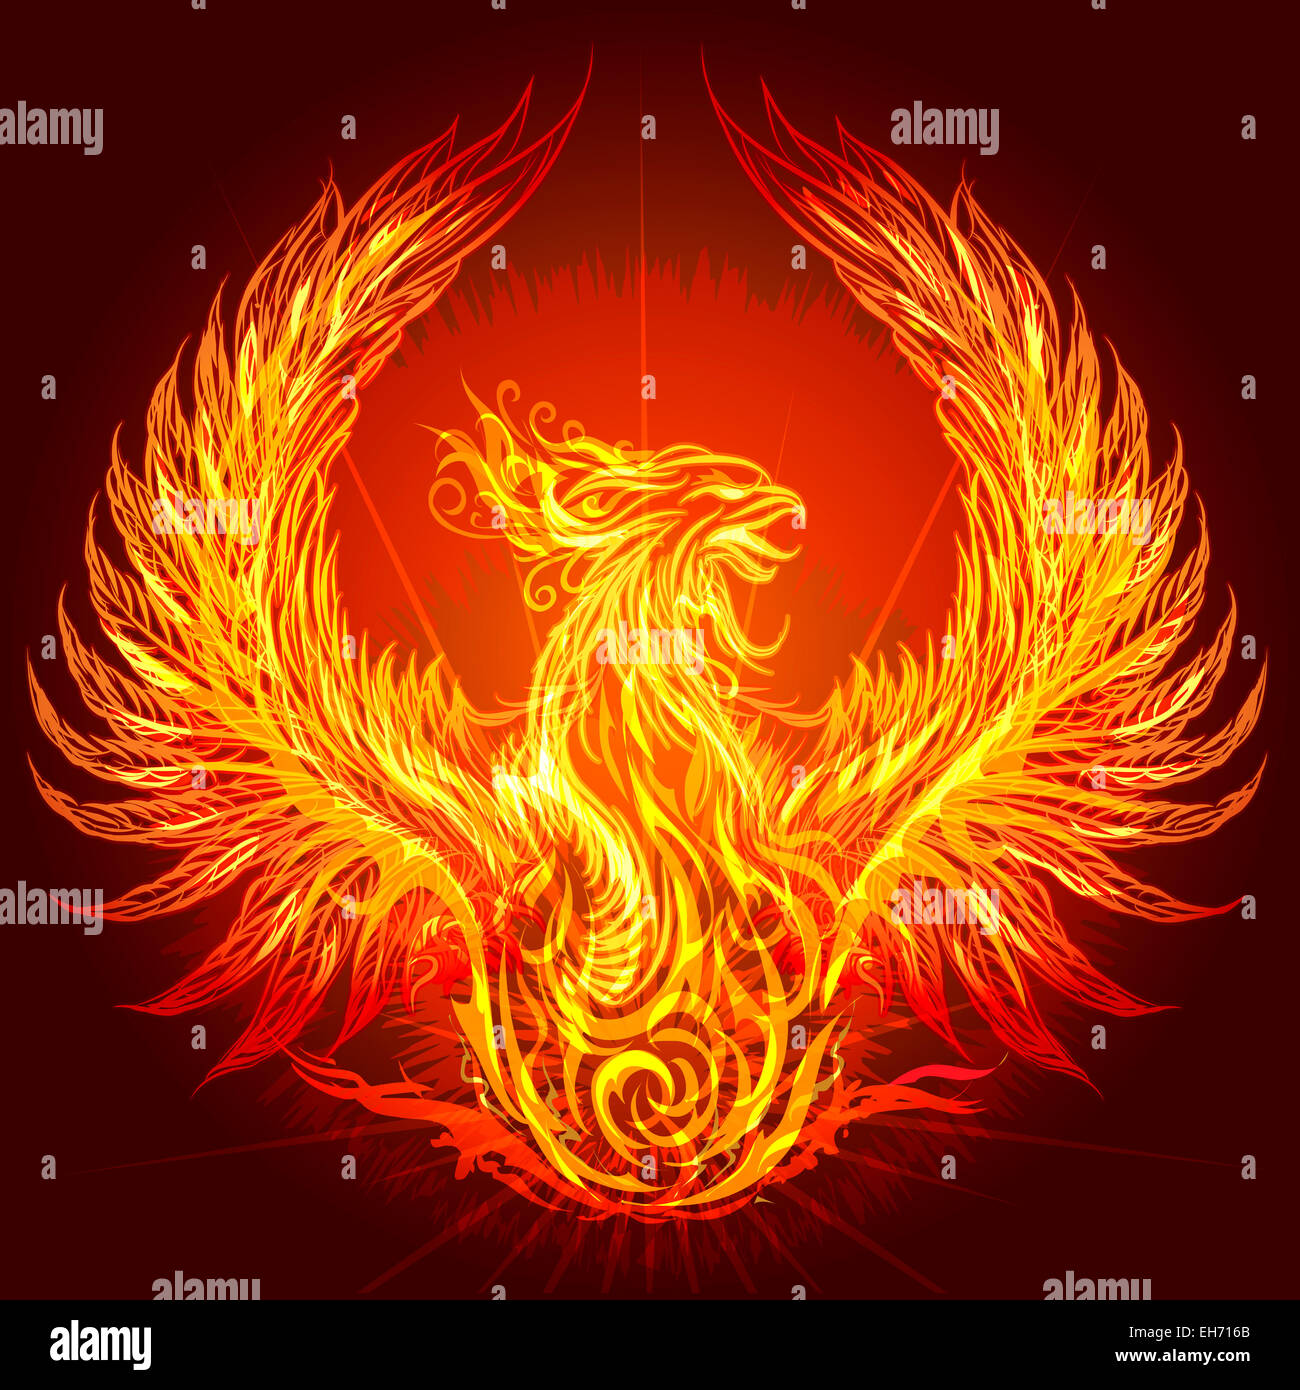 Illustration with burning phoenix drawn in heraldic style Stock Photo